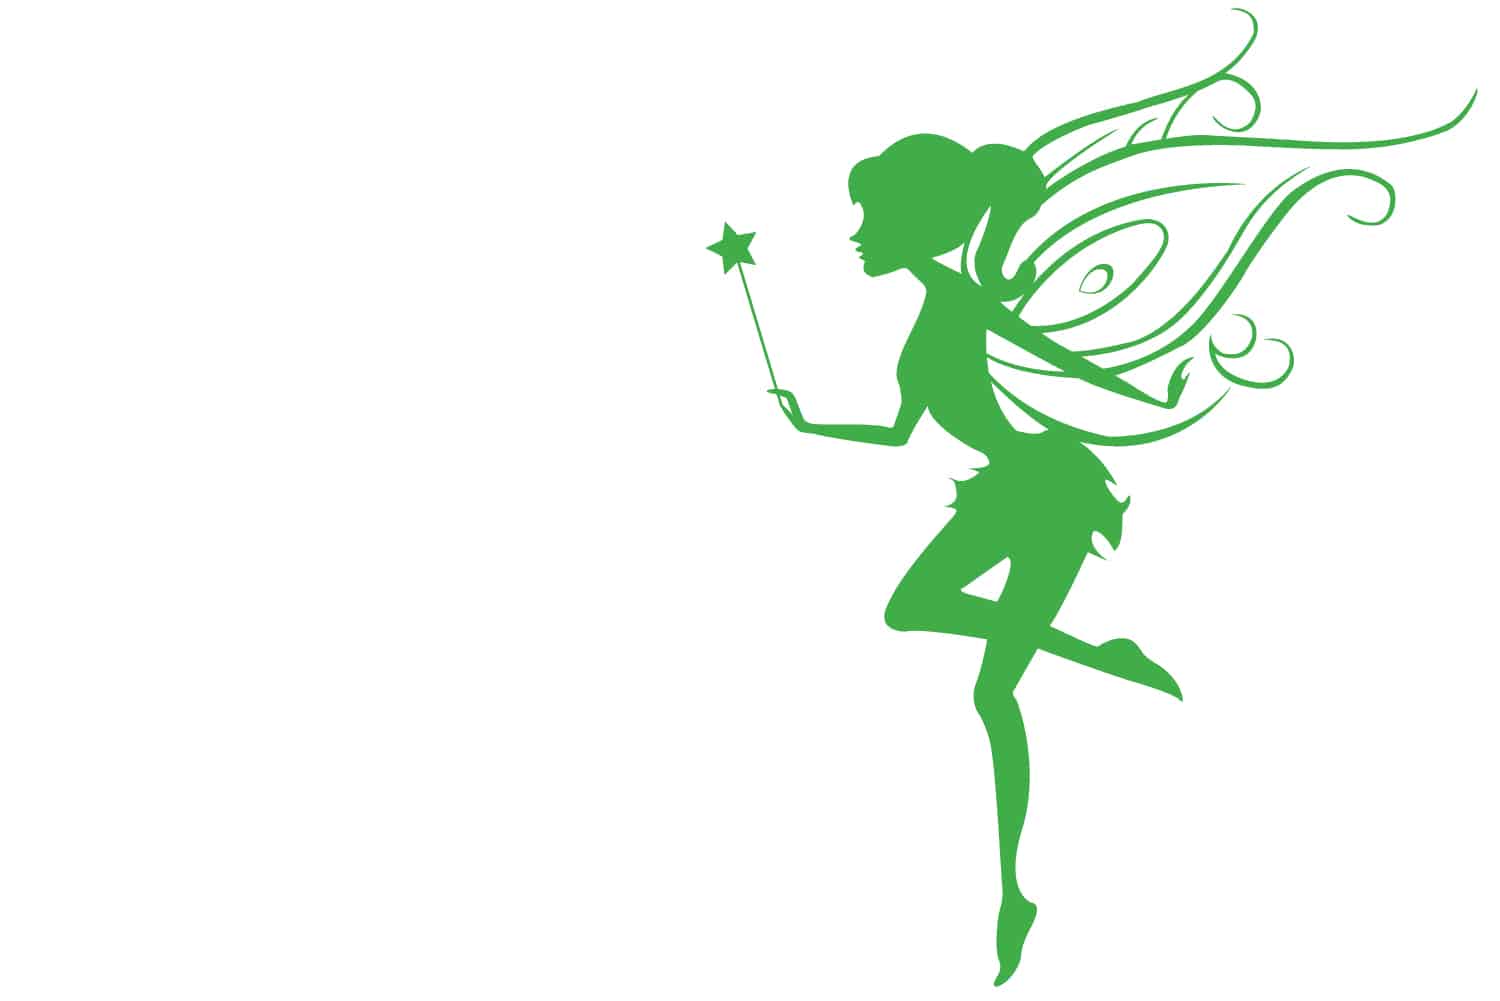 Green tinkerbell illustration